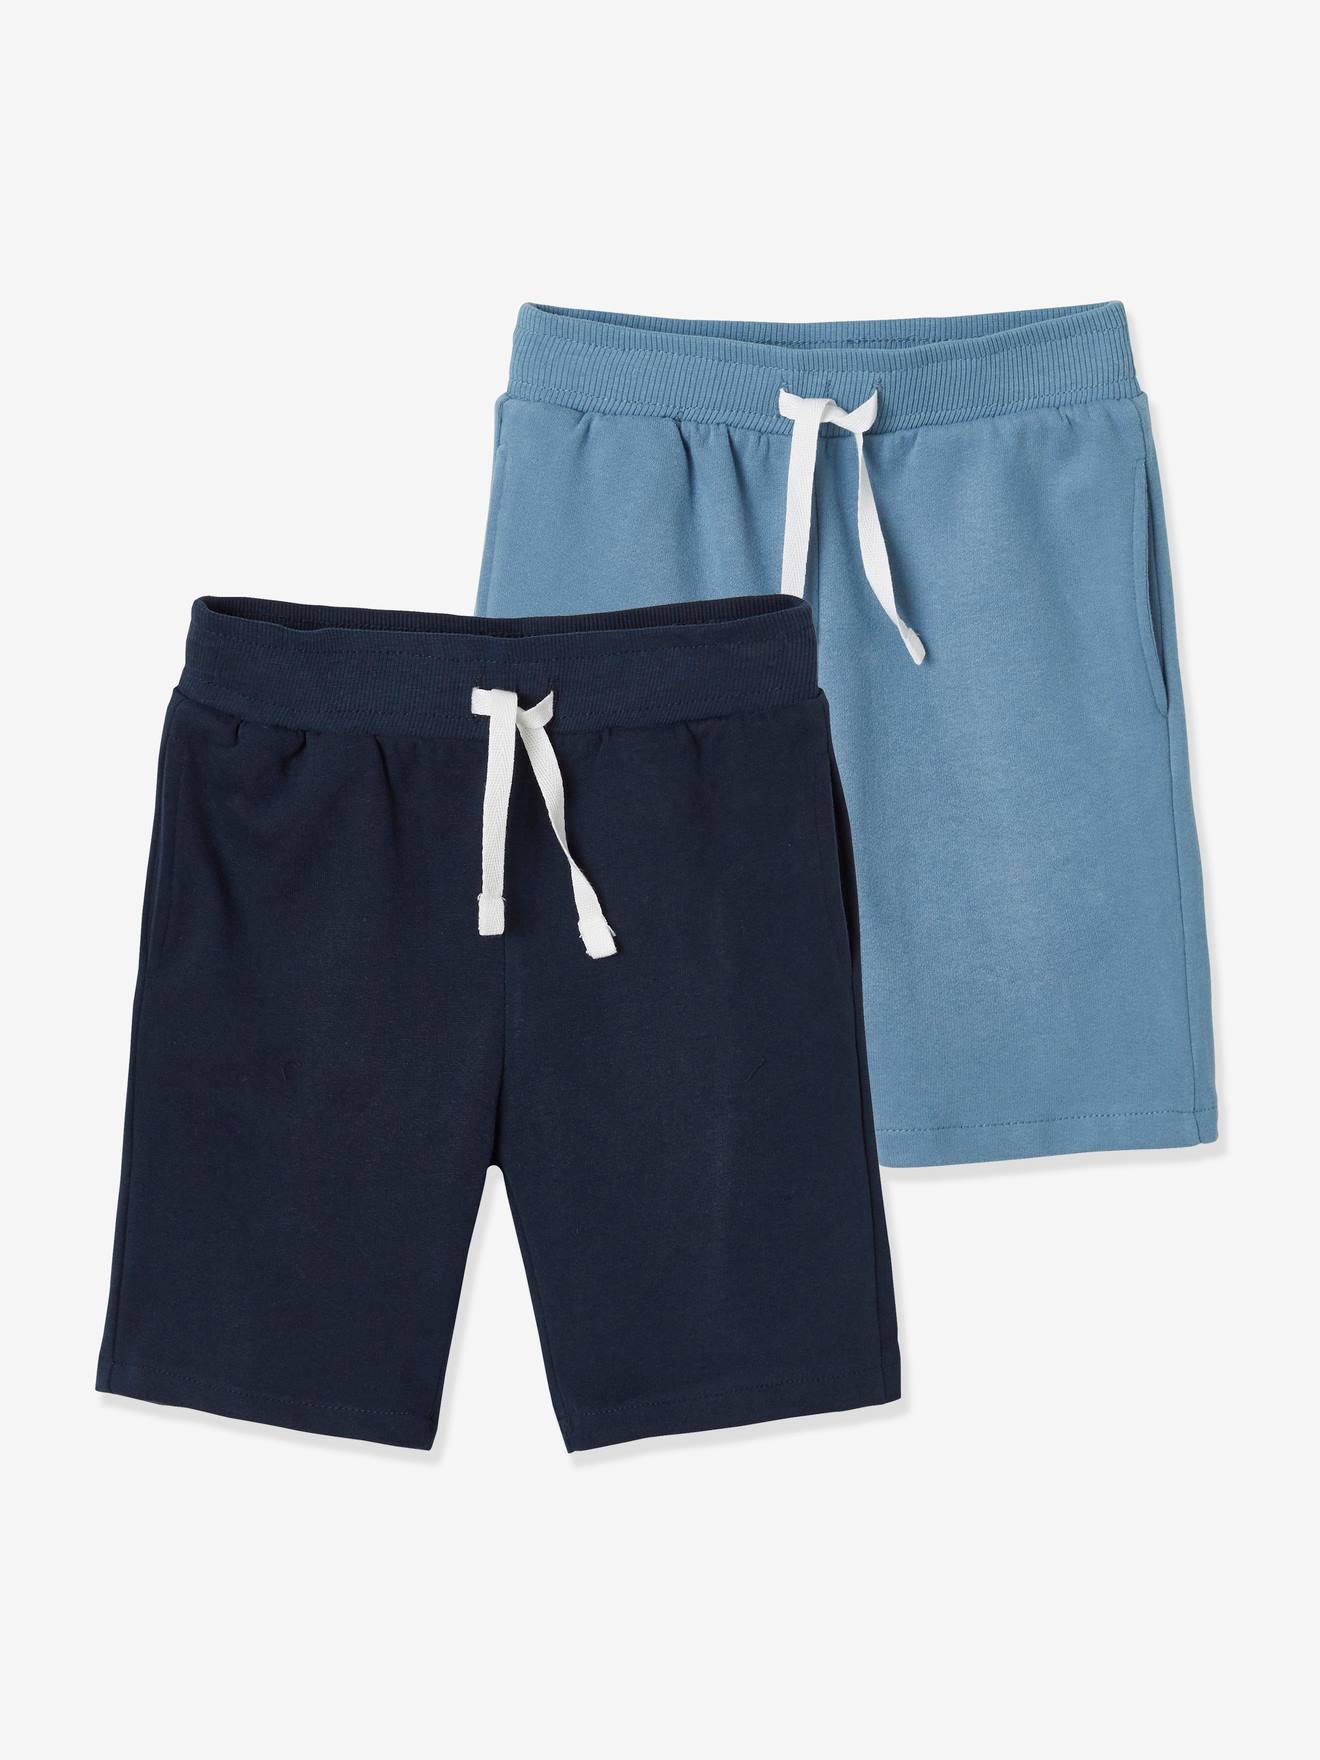 Pack of 2 Fleece Bermuda Shorts for Boys dark blue